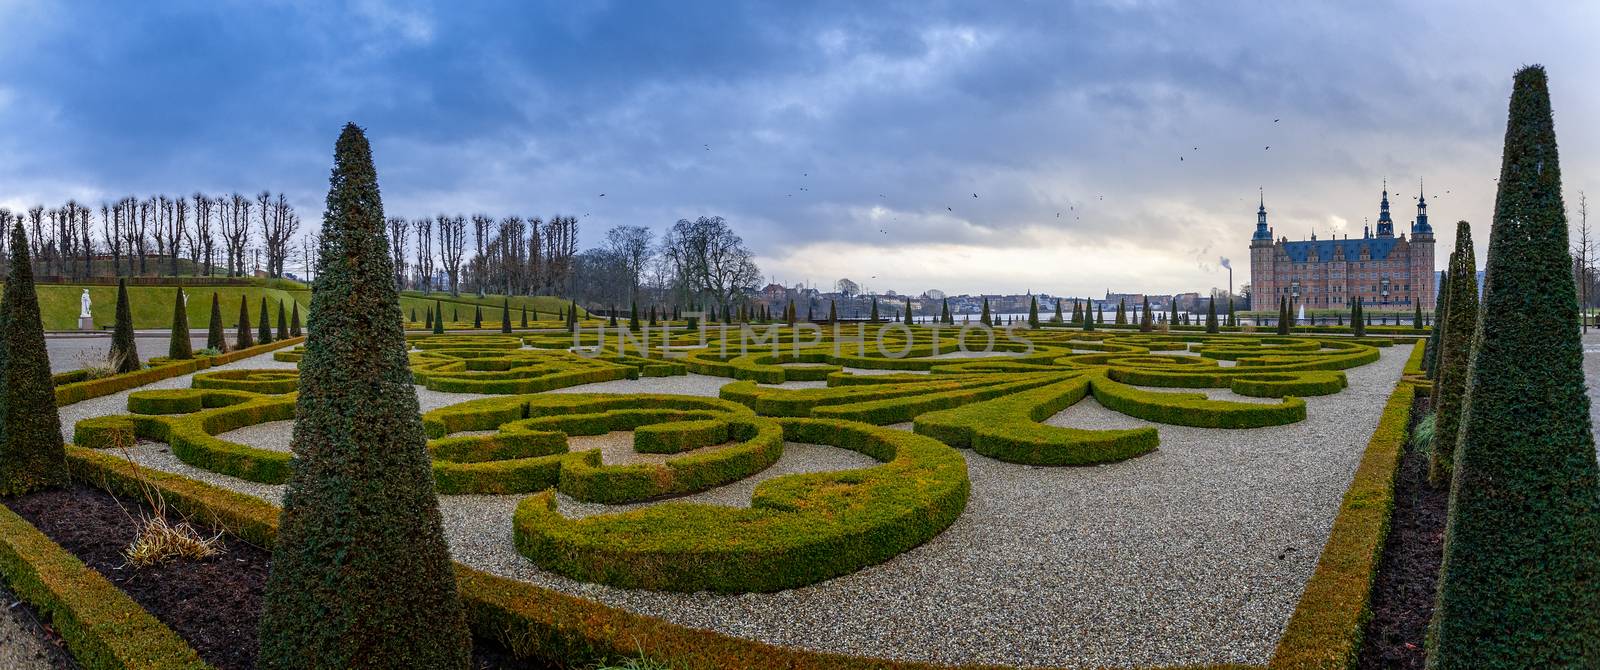 Frederiksborg castle , with ornamental landscape gardened shrubs by ambeon